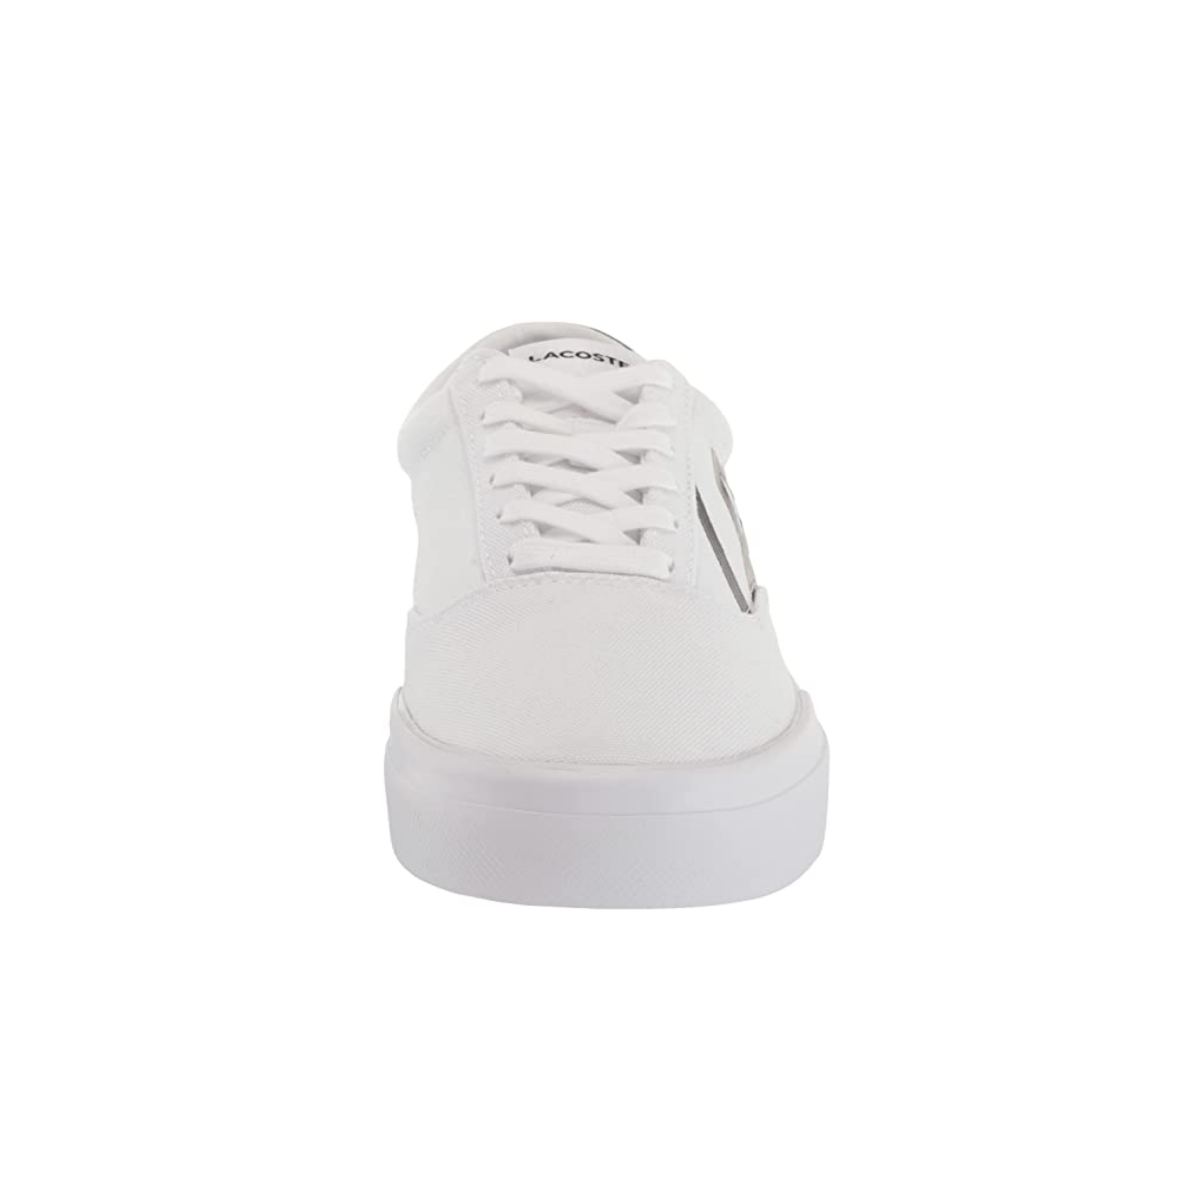 LACOSTE 7-43CMA0051147 JUMP SERVE LACE MN'S (Medium) White/Black Canvas Lifestyle Shoes